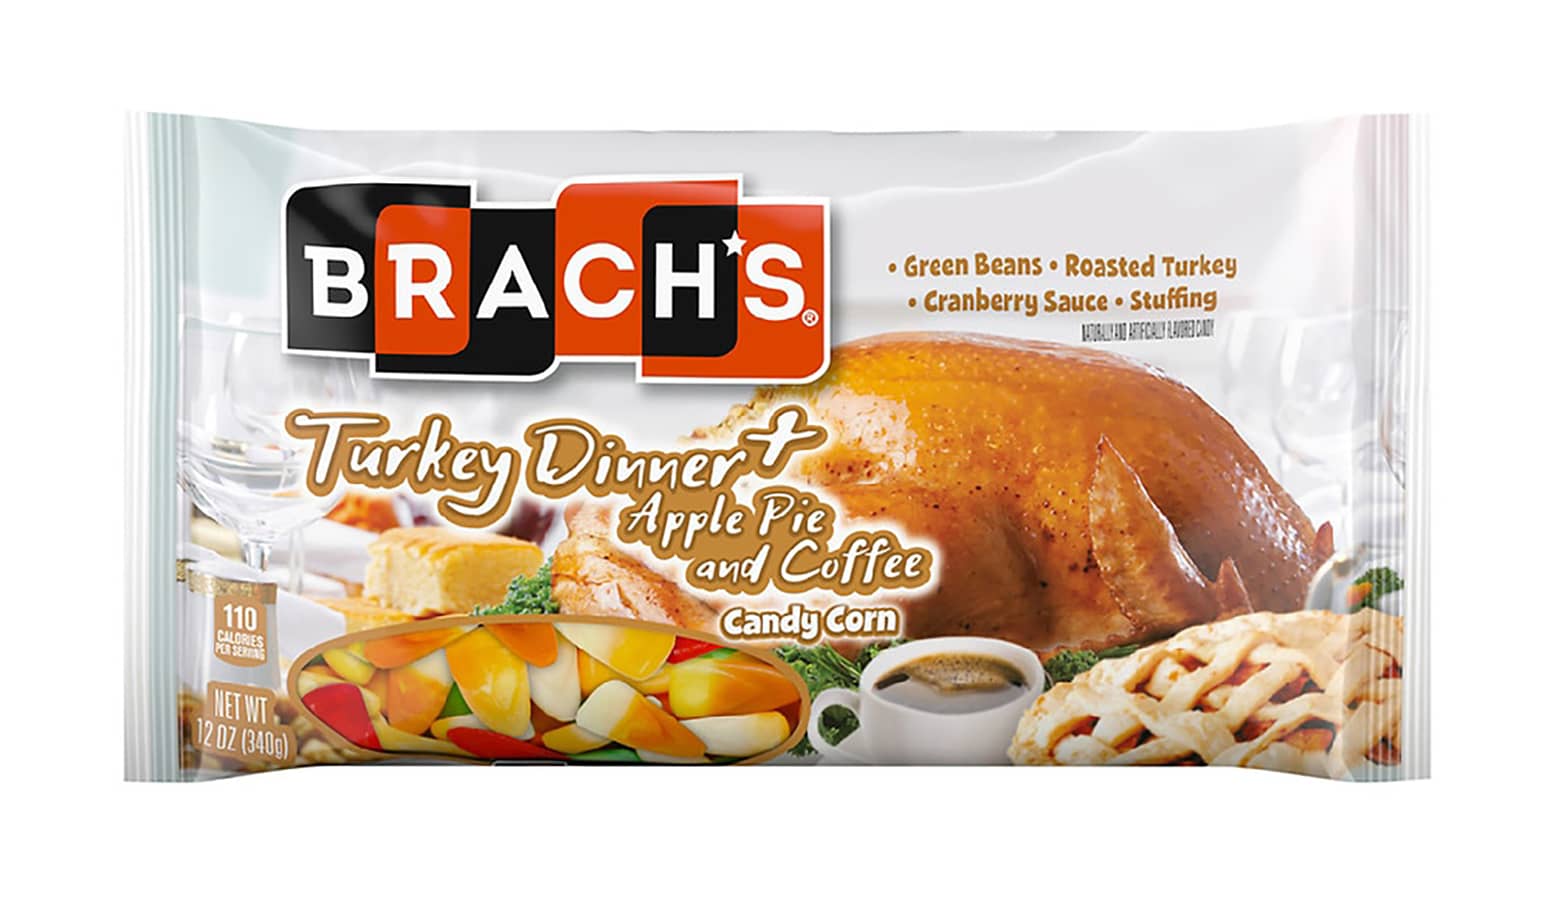 Brach's Turkey Dinner + Apple Pie and Coffee Candy Corn